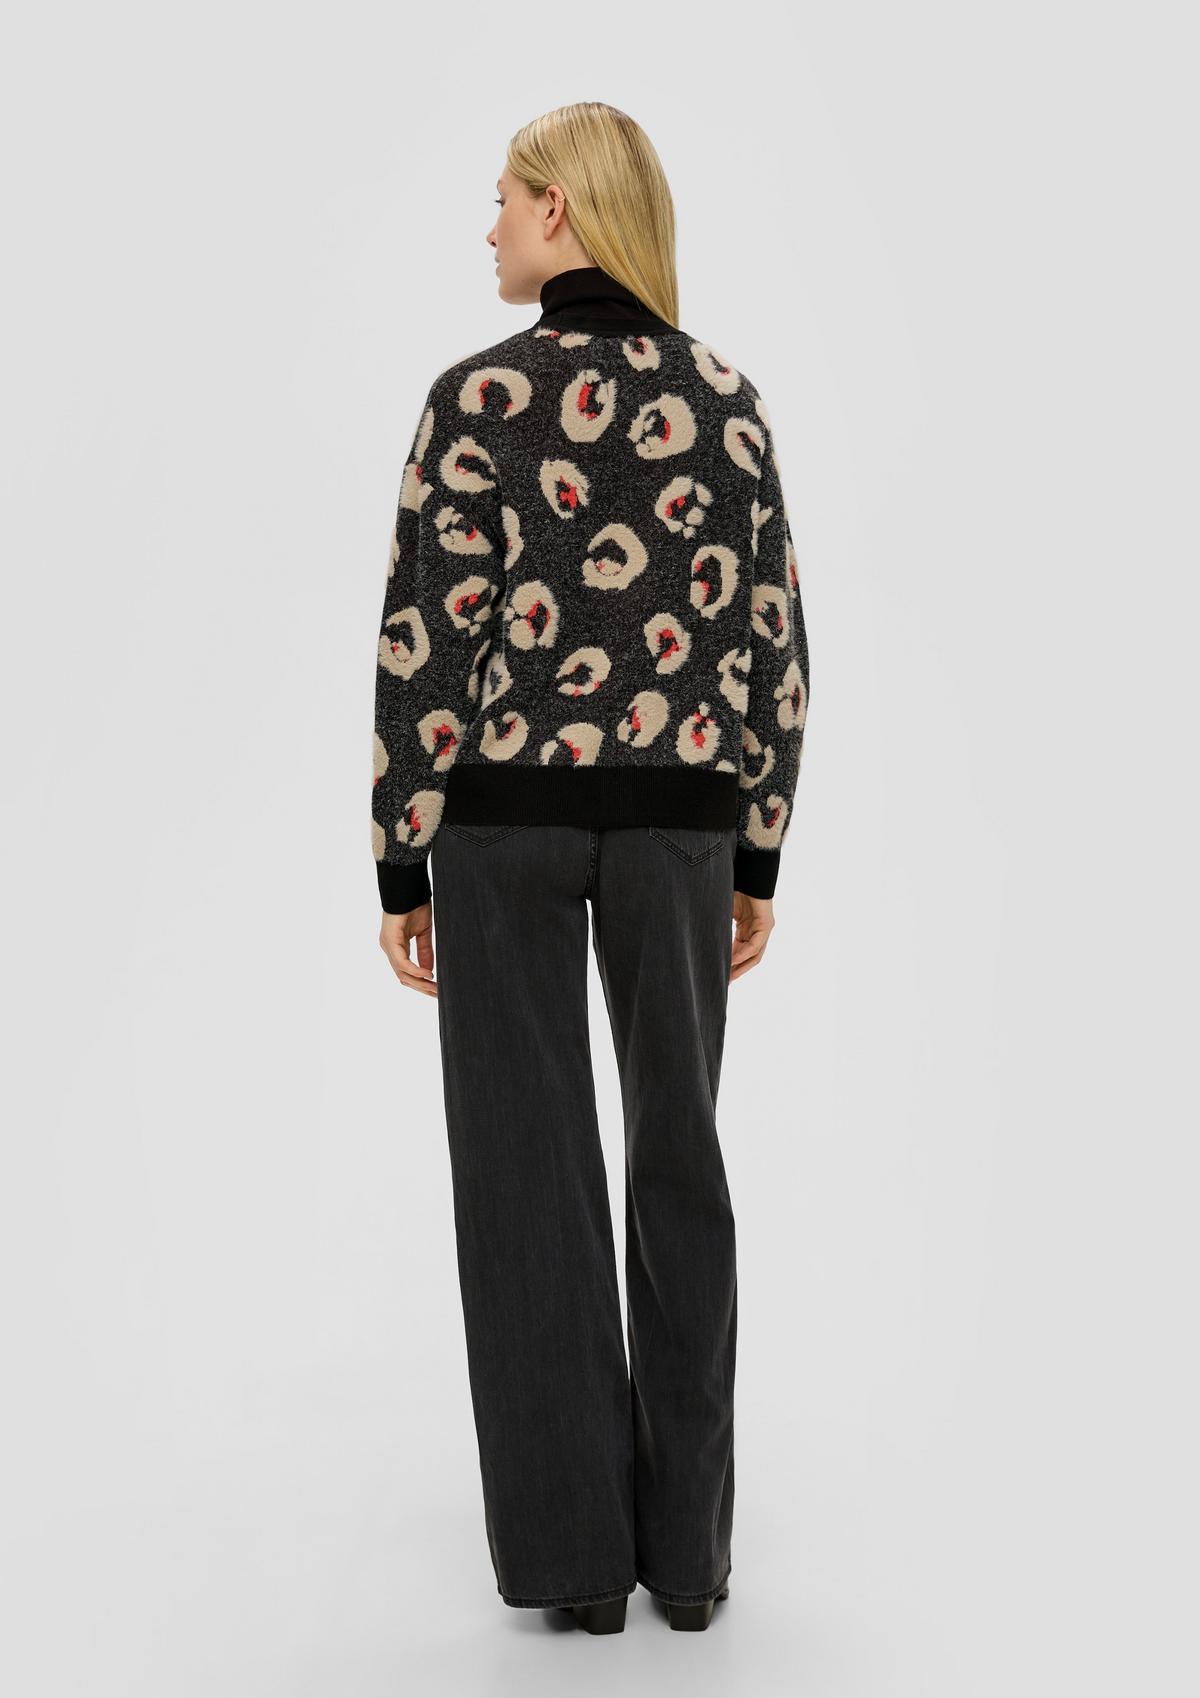 Cardigan with a leopard print pattern - black